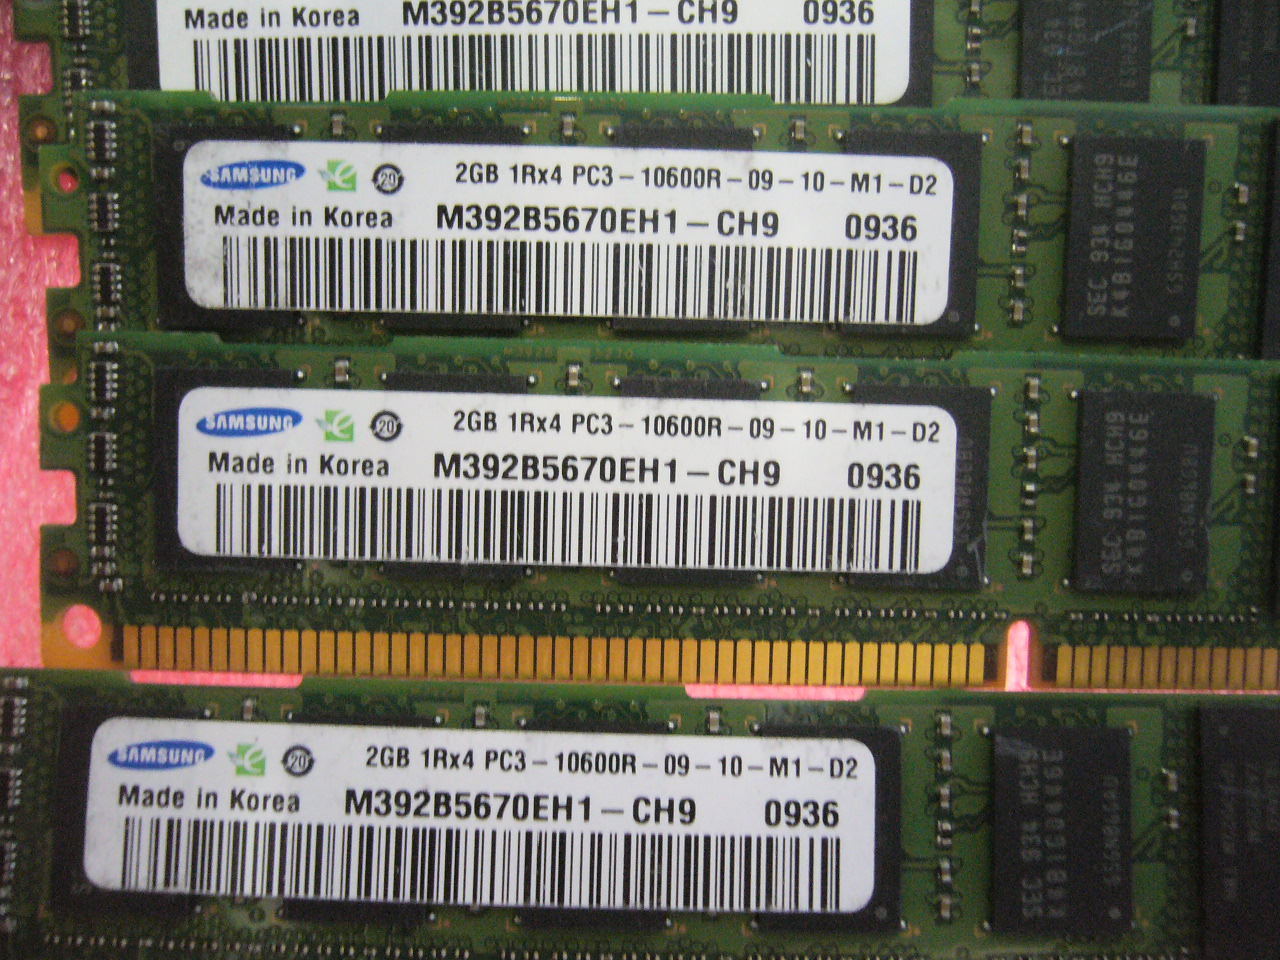 QTY 1x 2GB DDR3 PC3-10600R ECC Registered memory IBM P/N 43X5051 - Click Image to Close